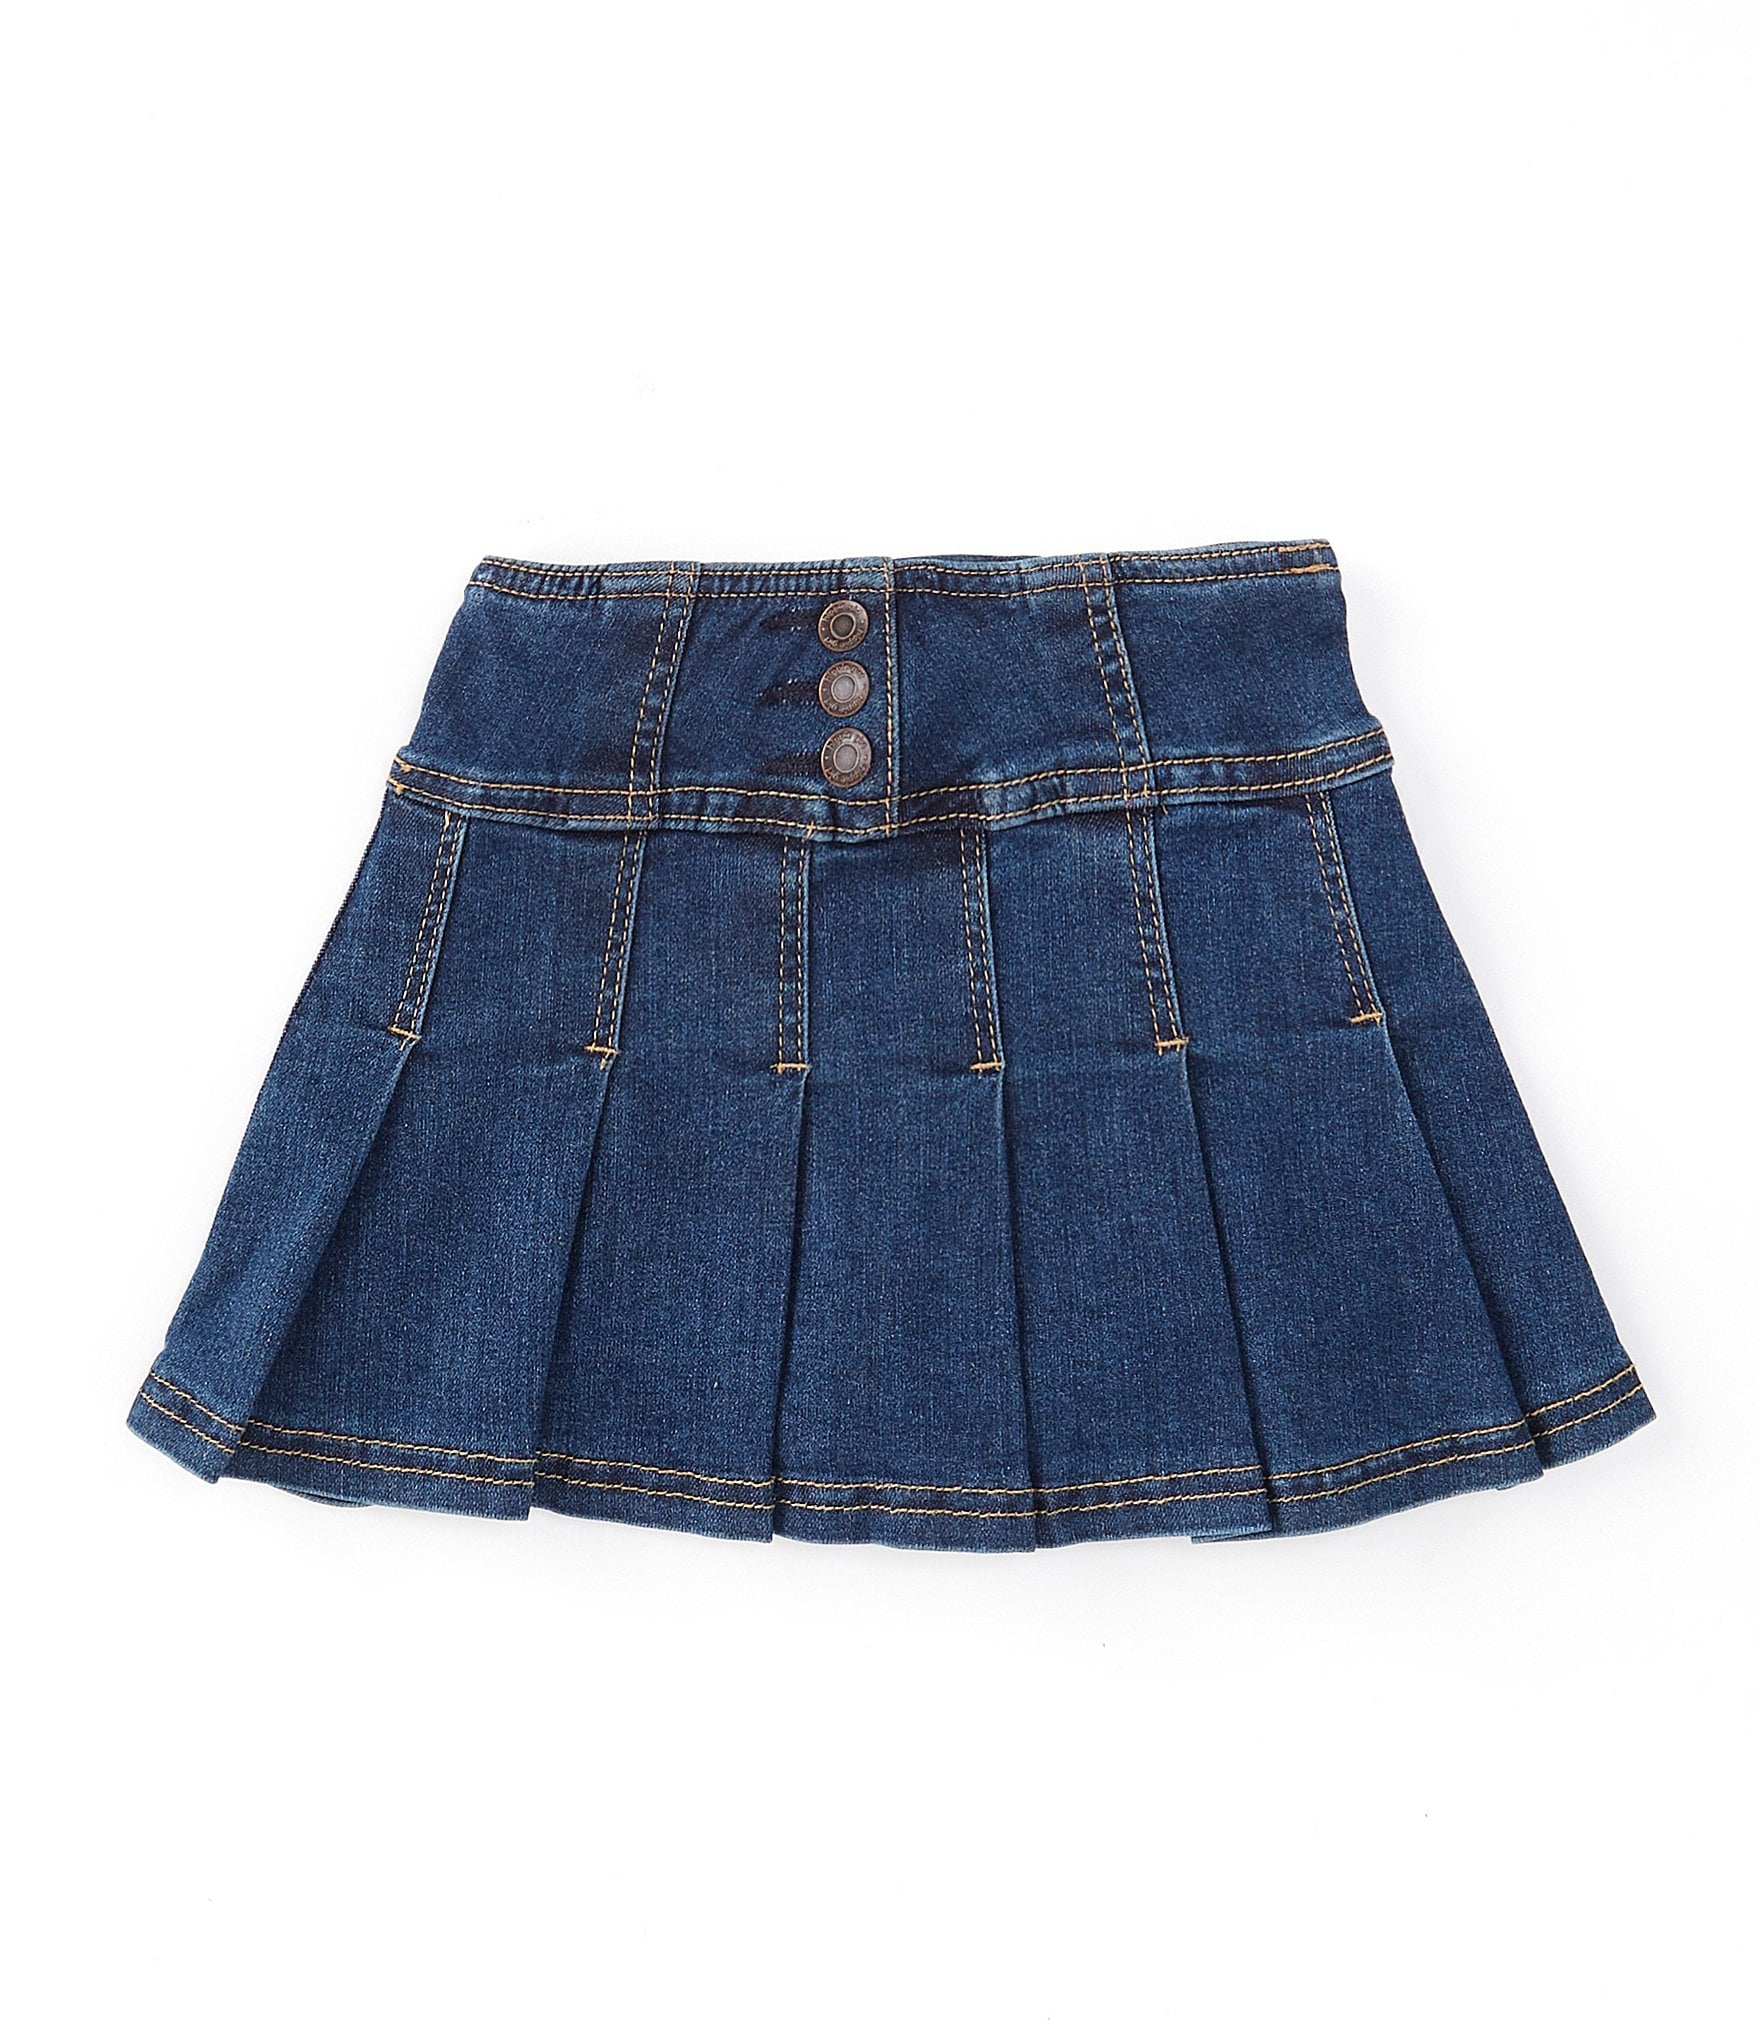 Hippie Girl Little Girls 4-6X Pleated Denim Skirt | Dillard's